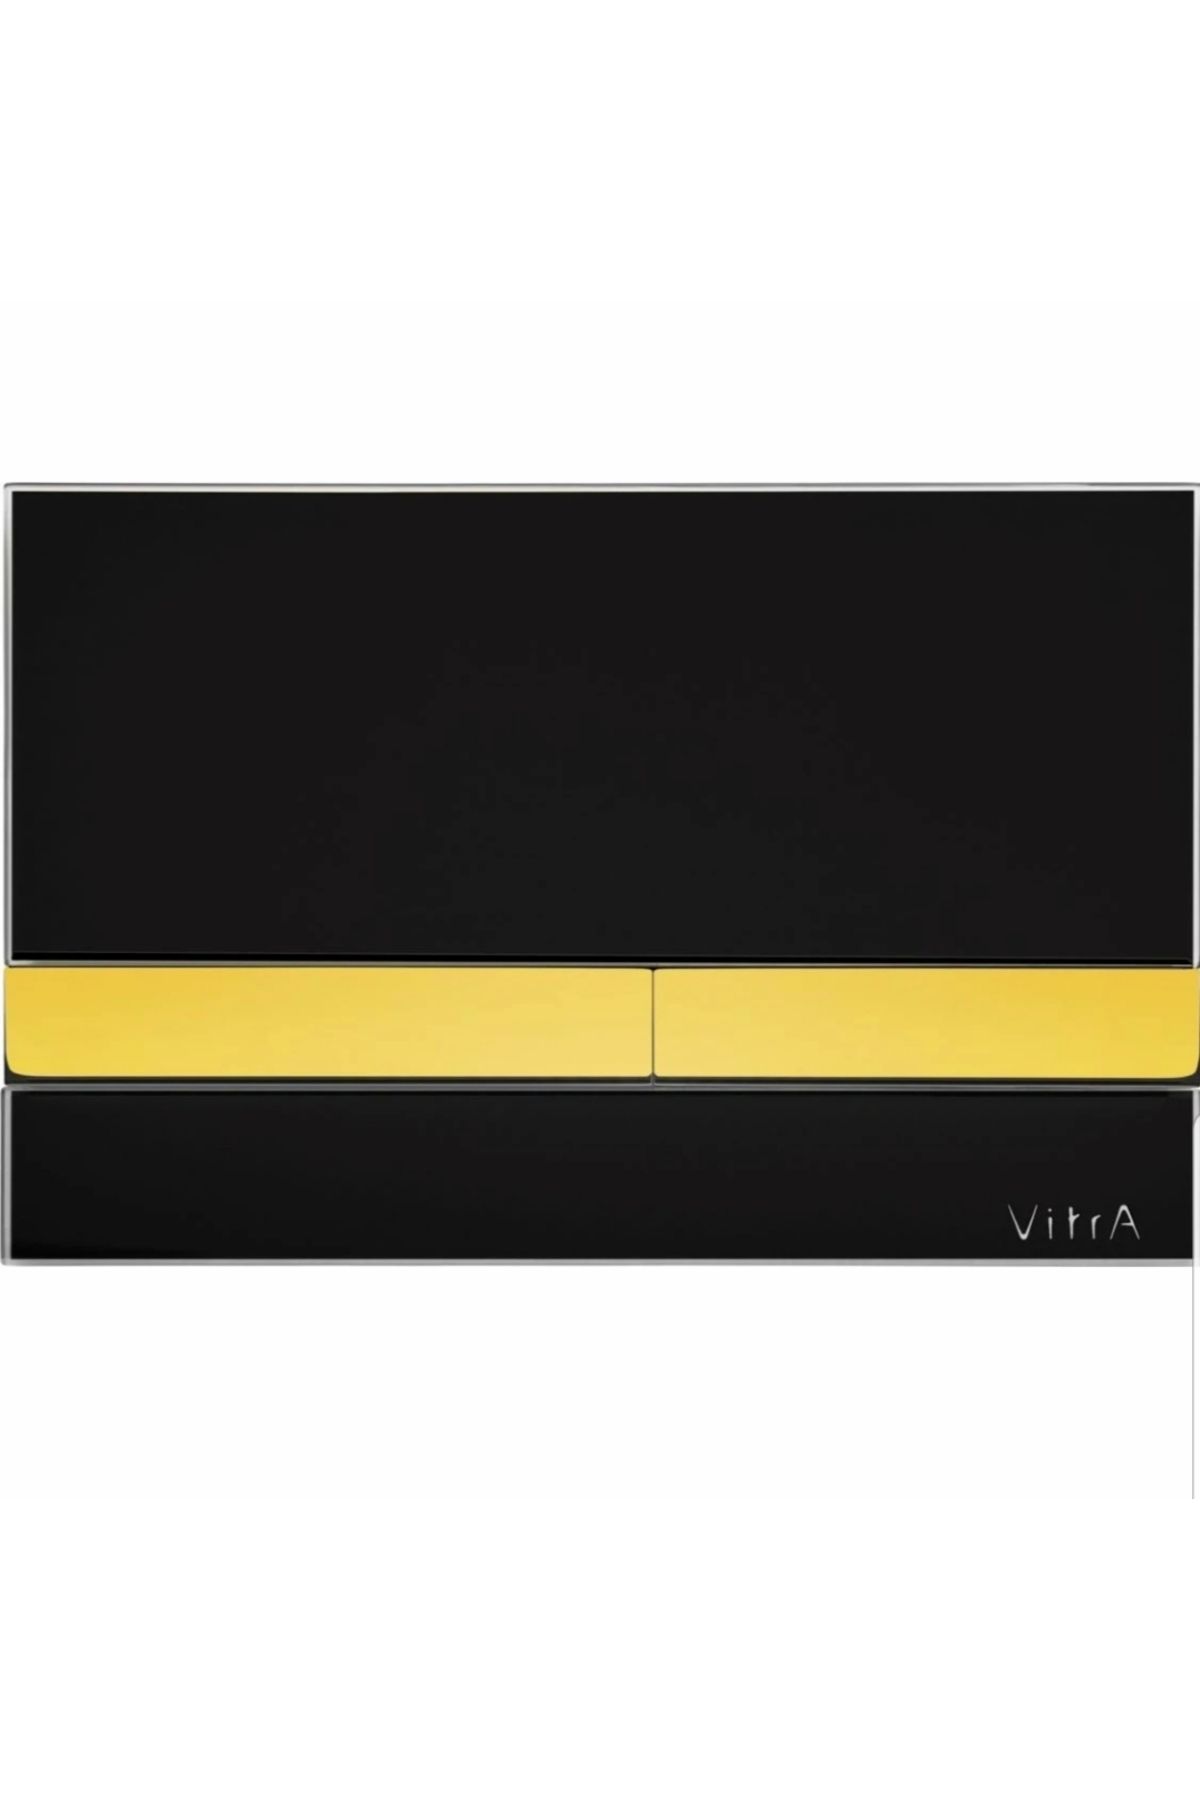 VitrA Select Kumanda Paneli Cam , Siyah - Altın Buton